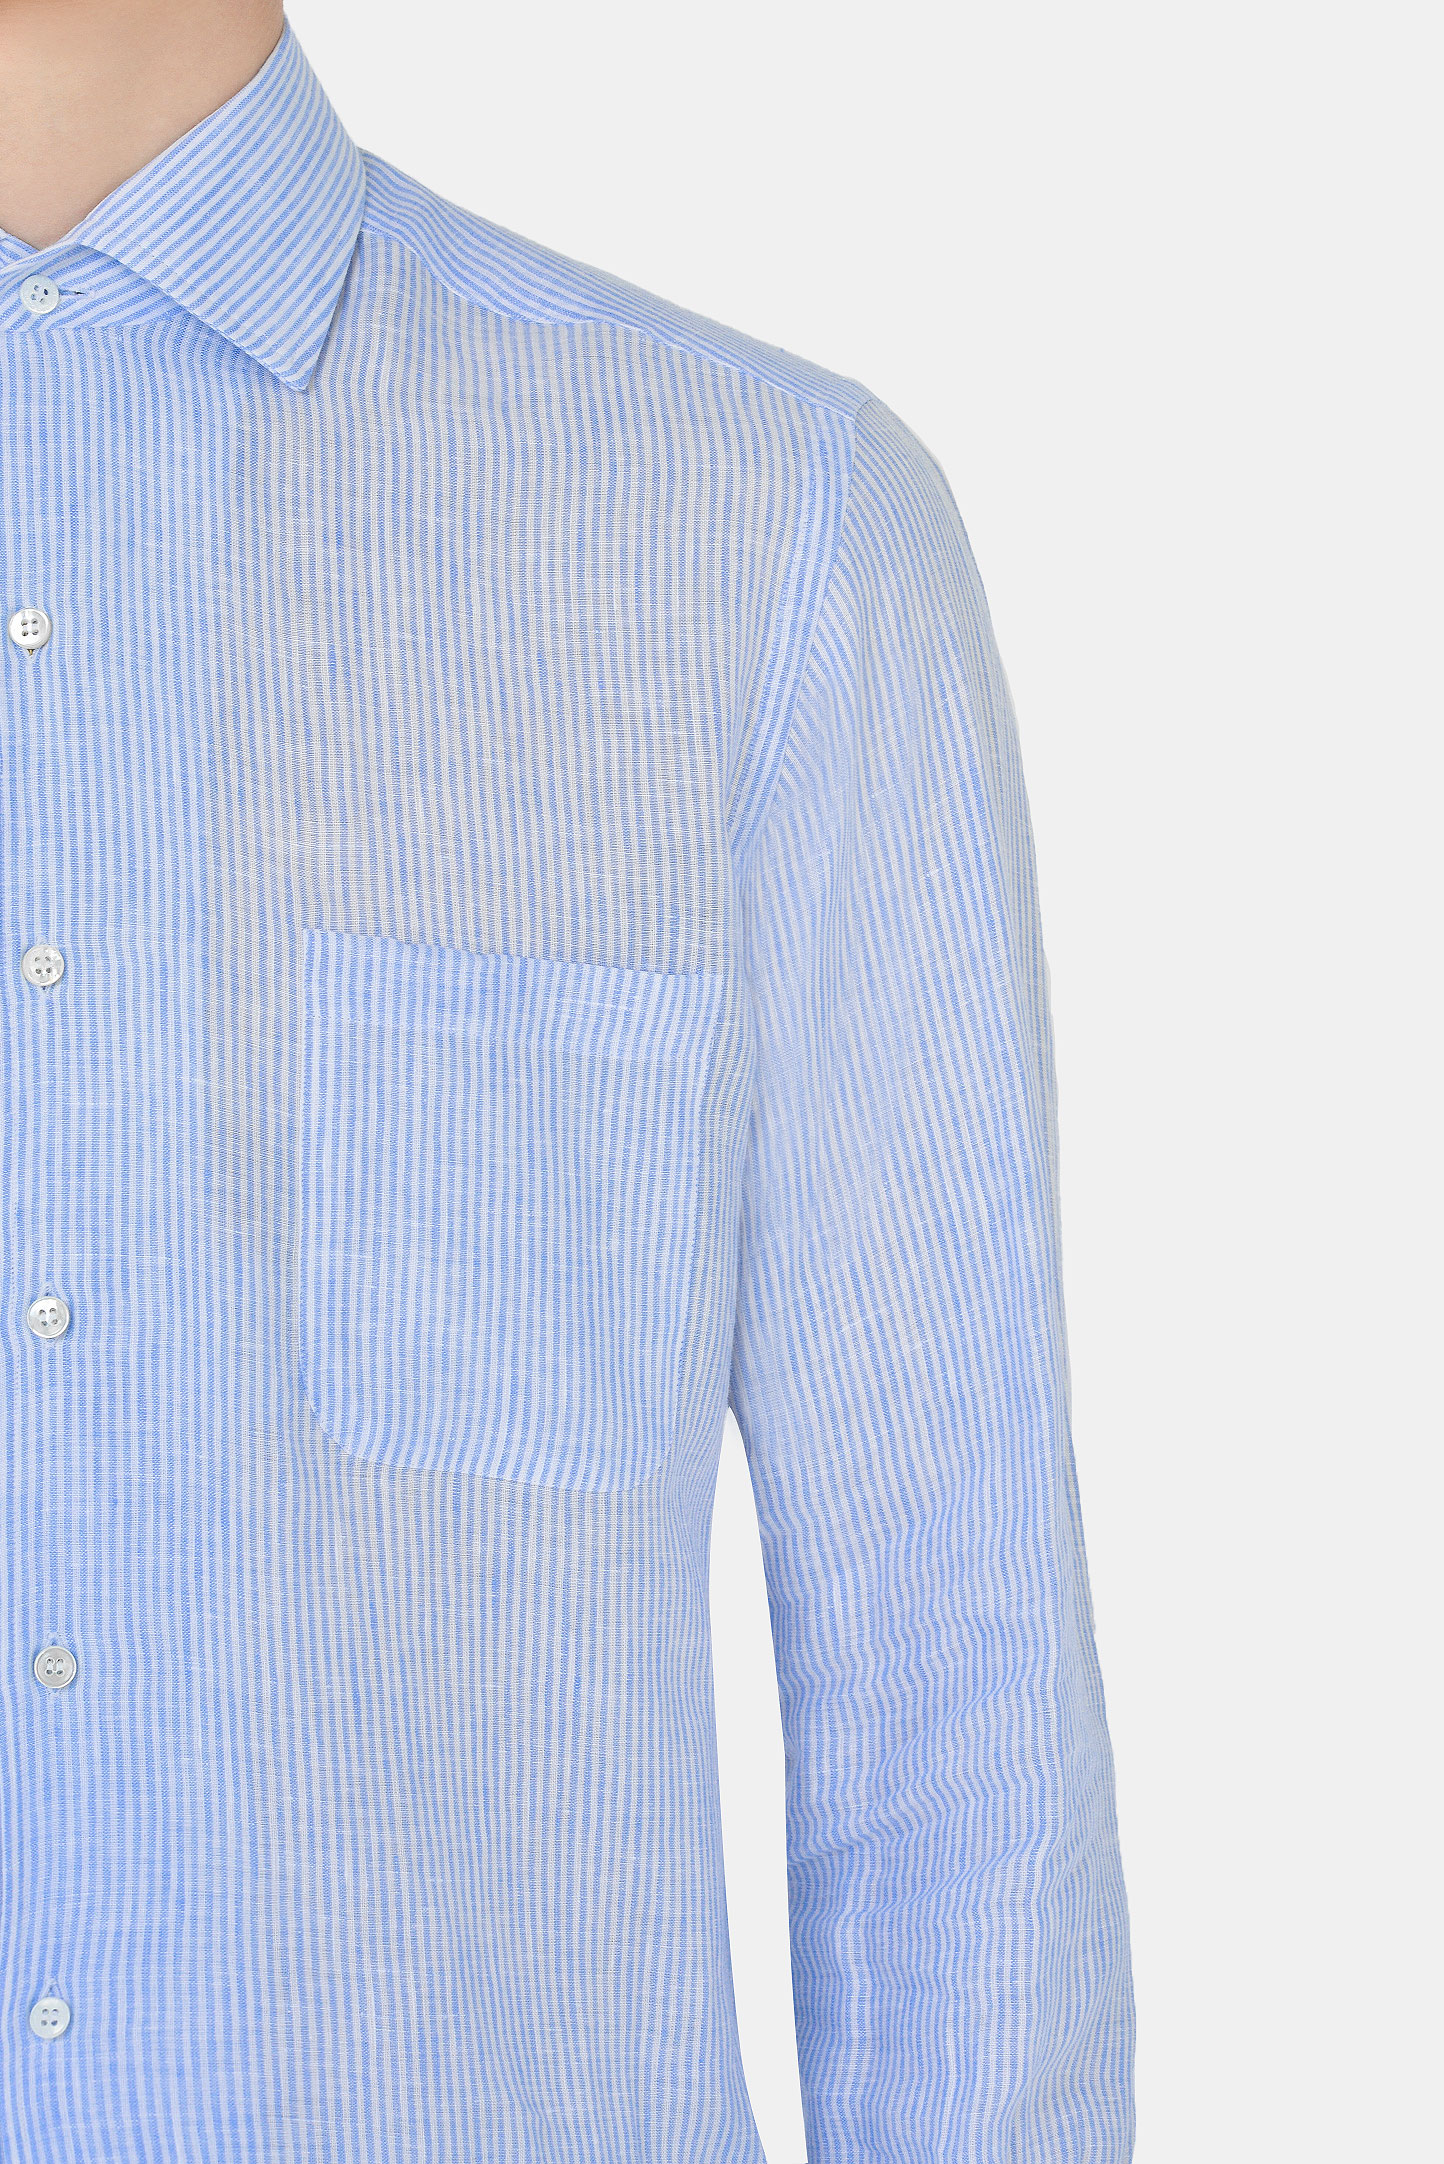 Рубашка LORO PIANA F1-FAL6145, цвет: Голубой, Мужской